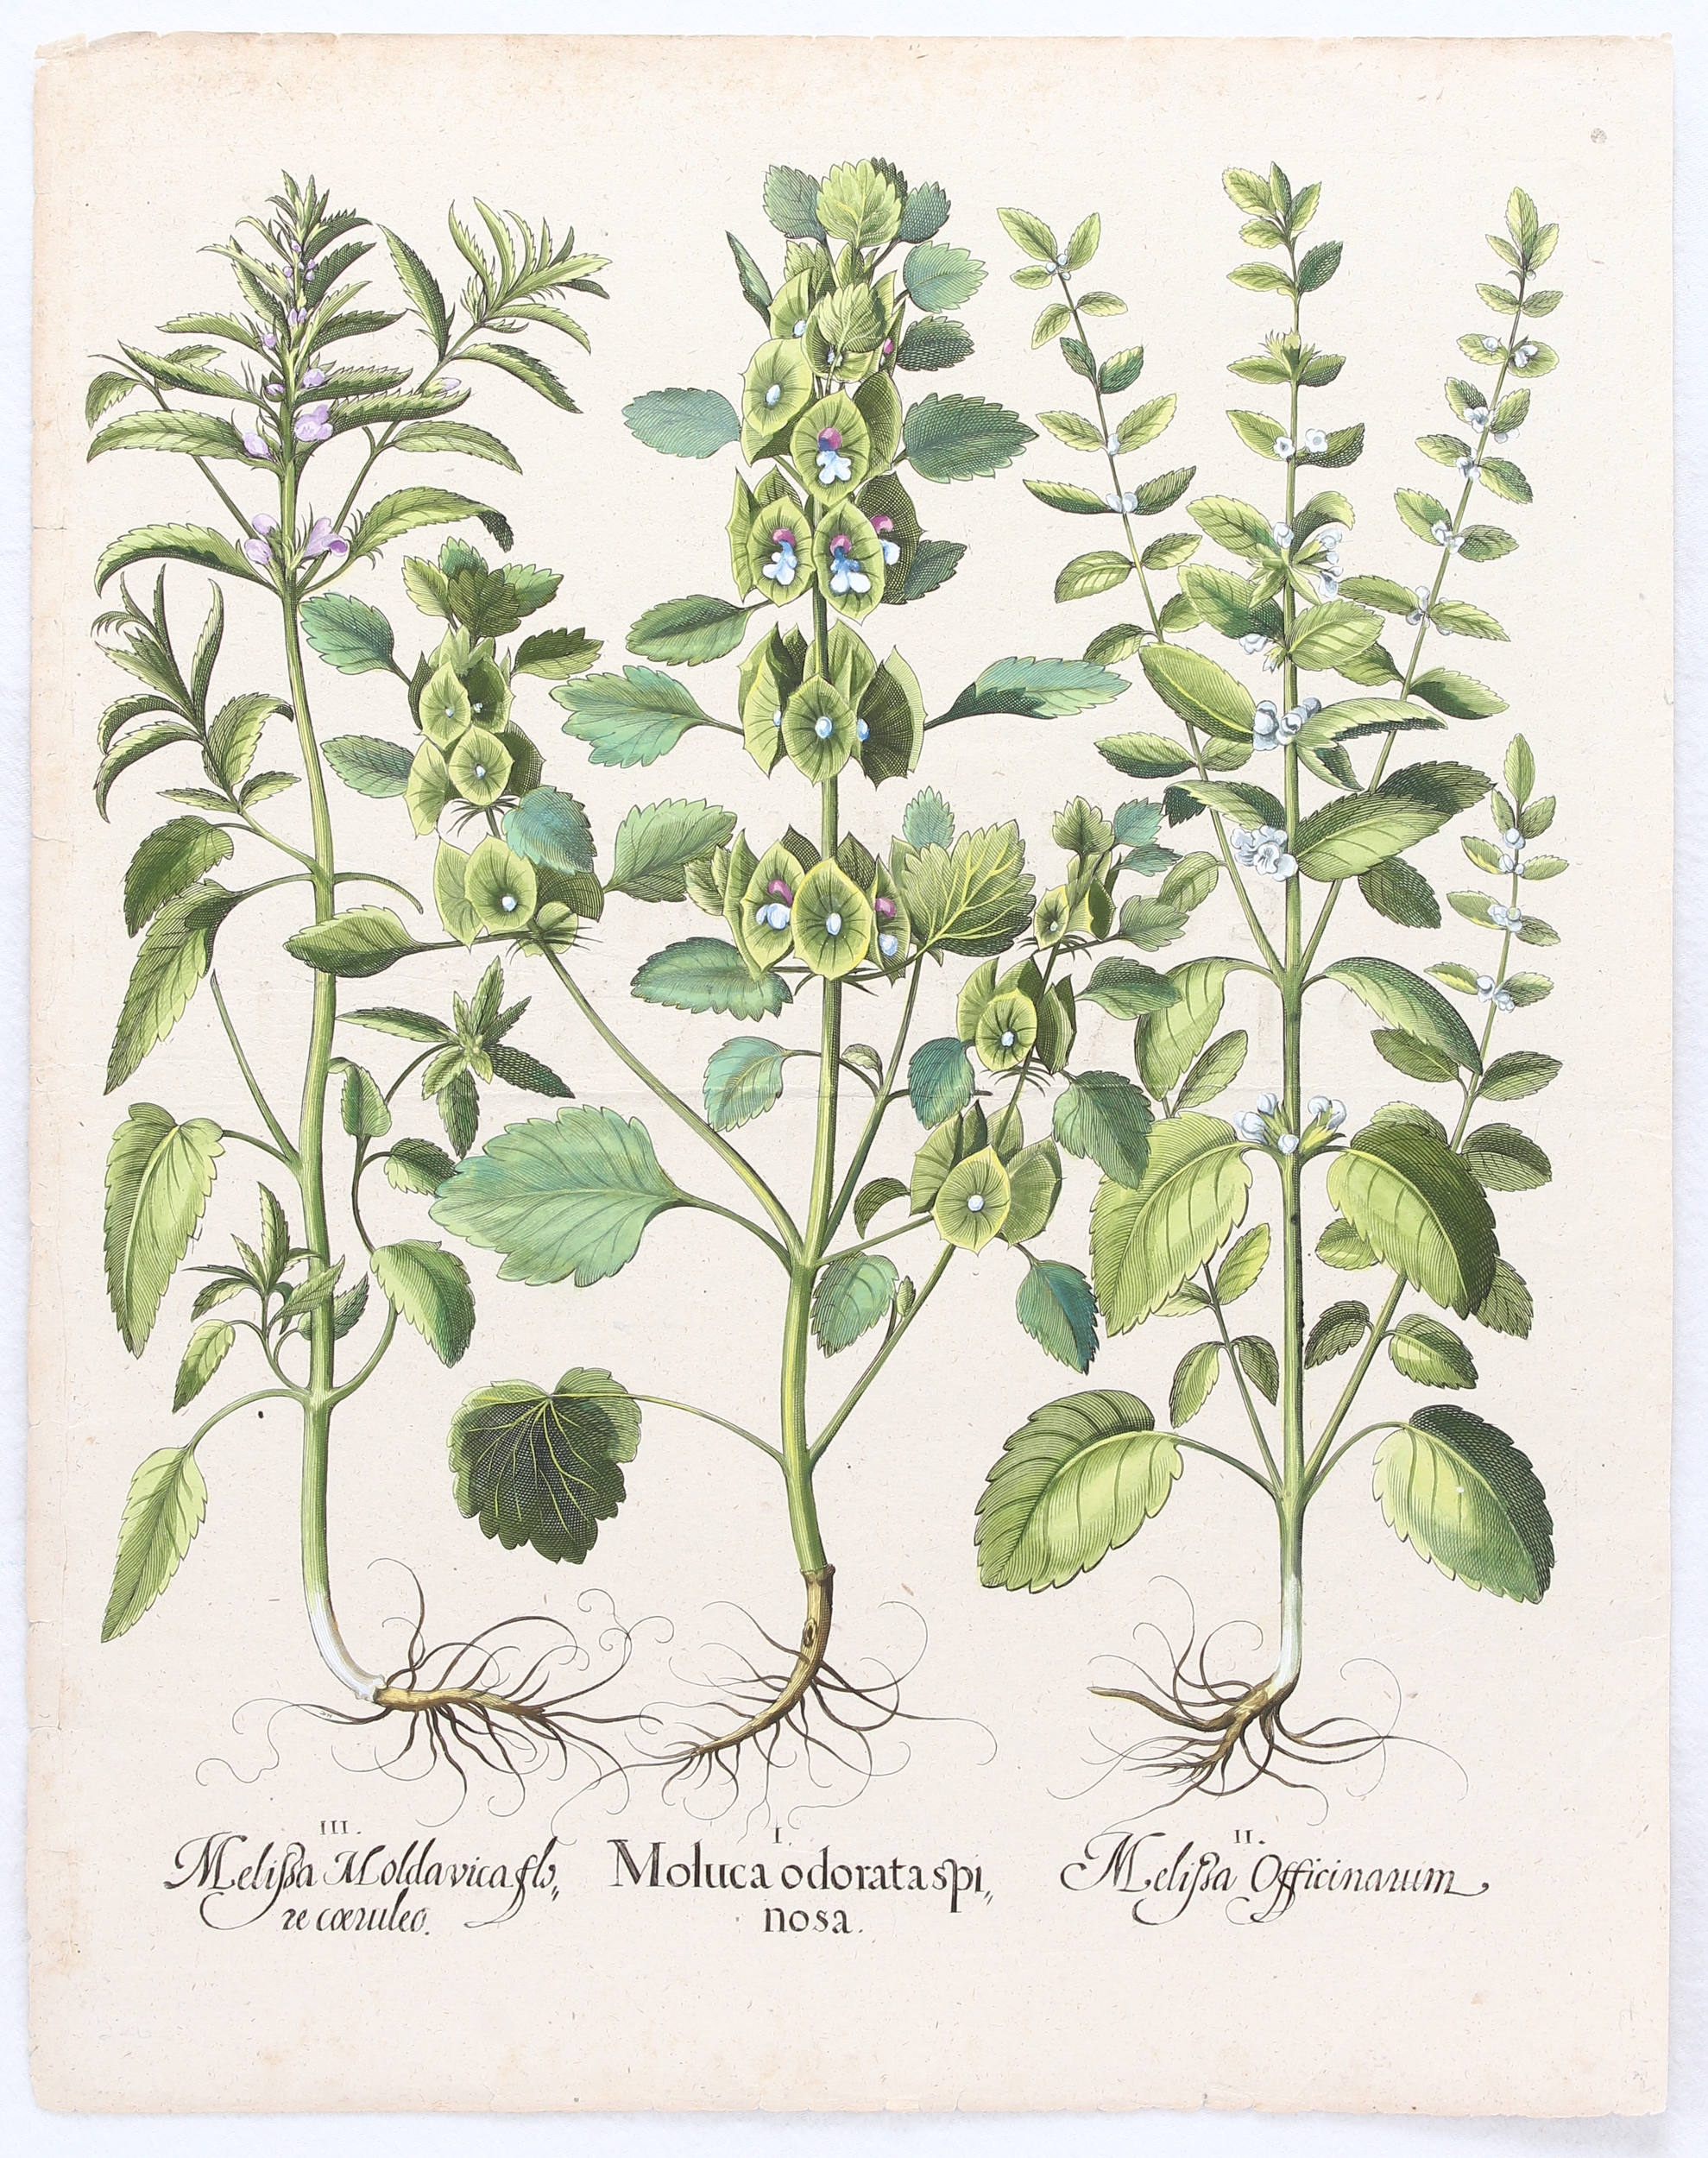 Moluca odorata spinosa, Melißa Officinarum (&) Moldavica flore coeruleo (Muschelblume, Zitronen- u. Türk. Melisse) by Basilius Besler